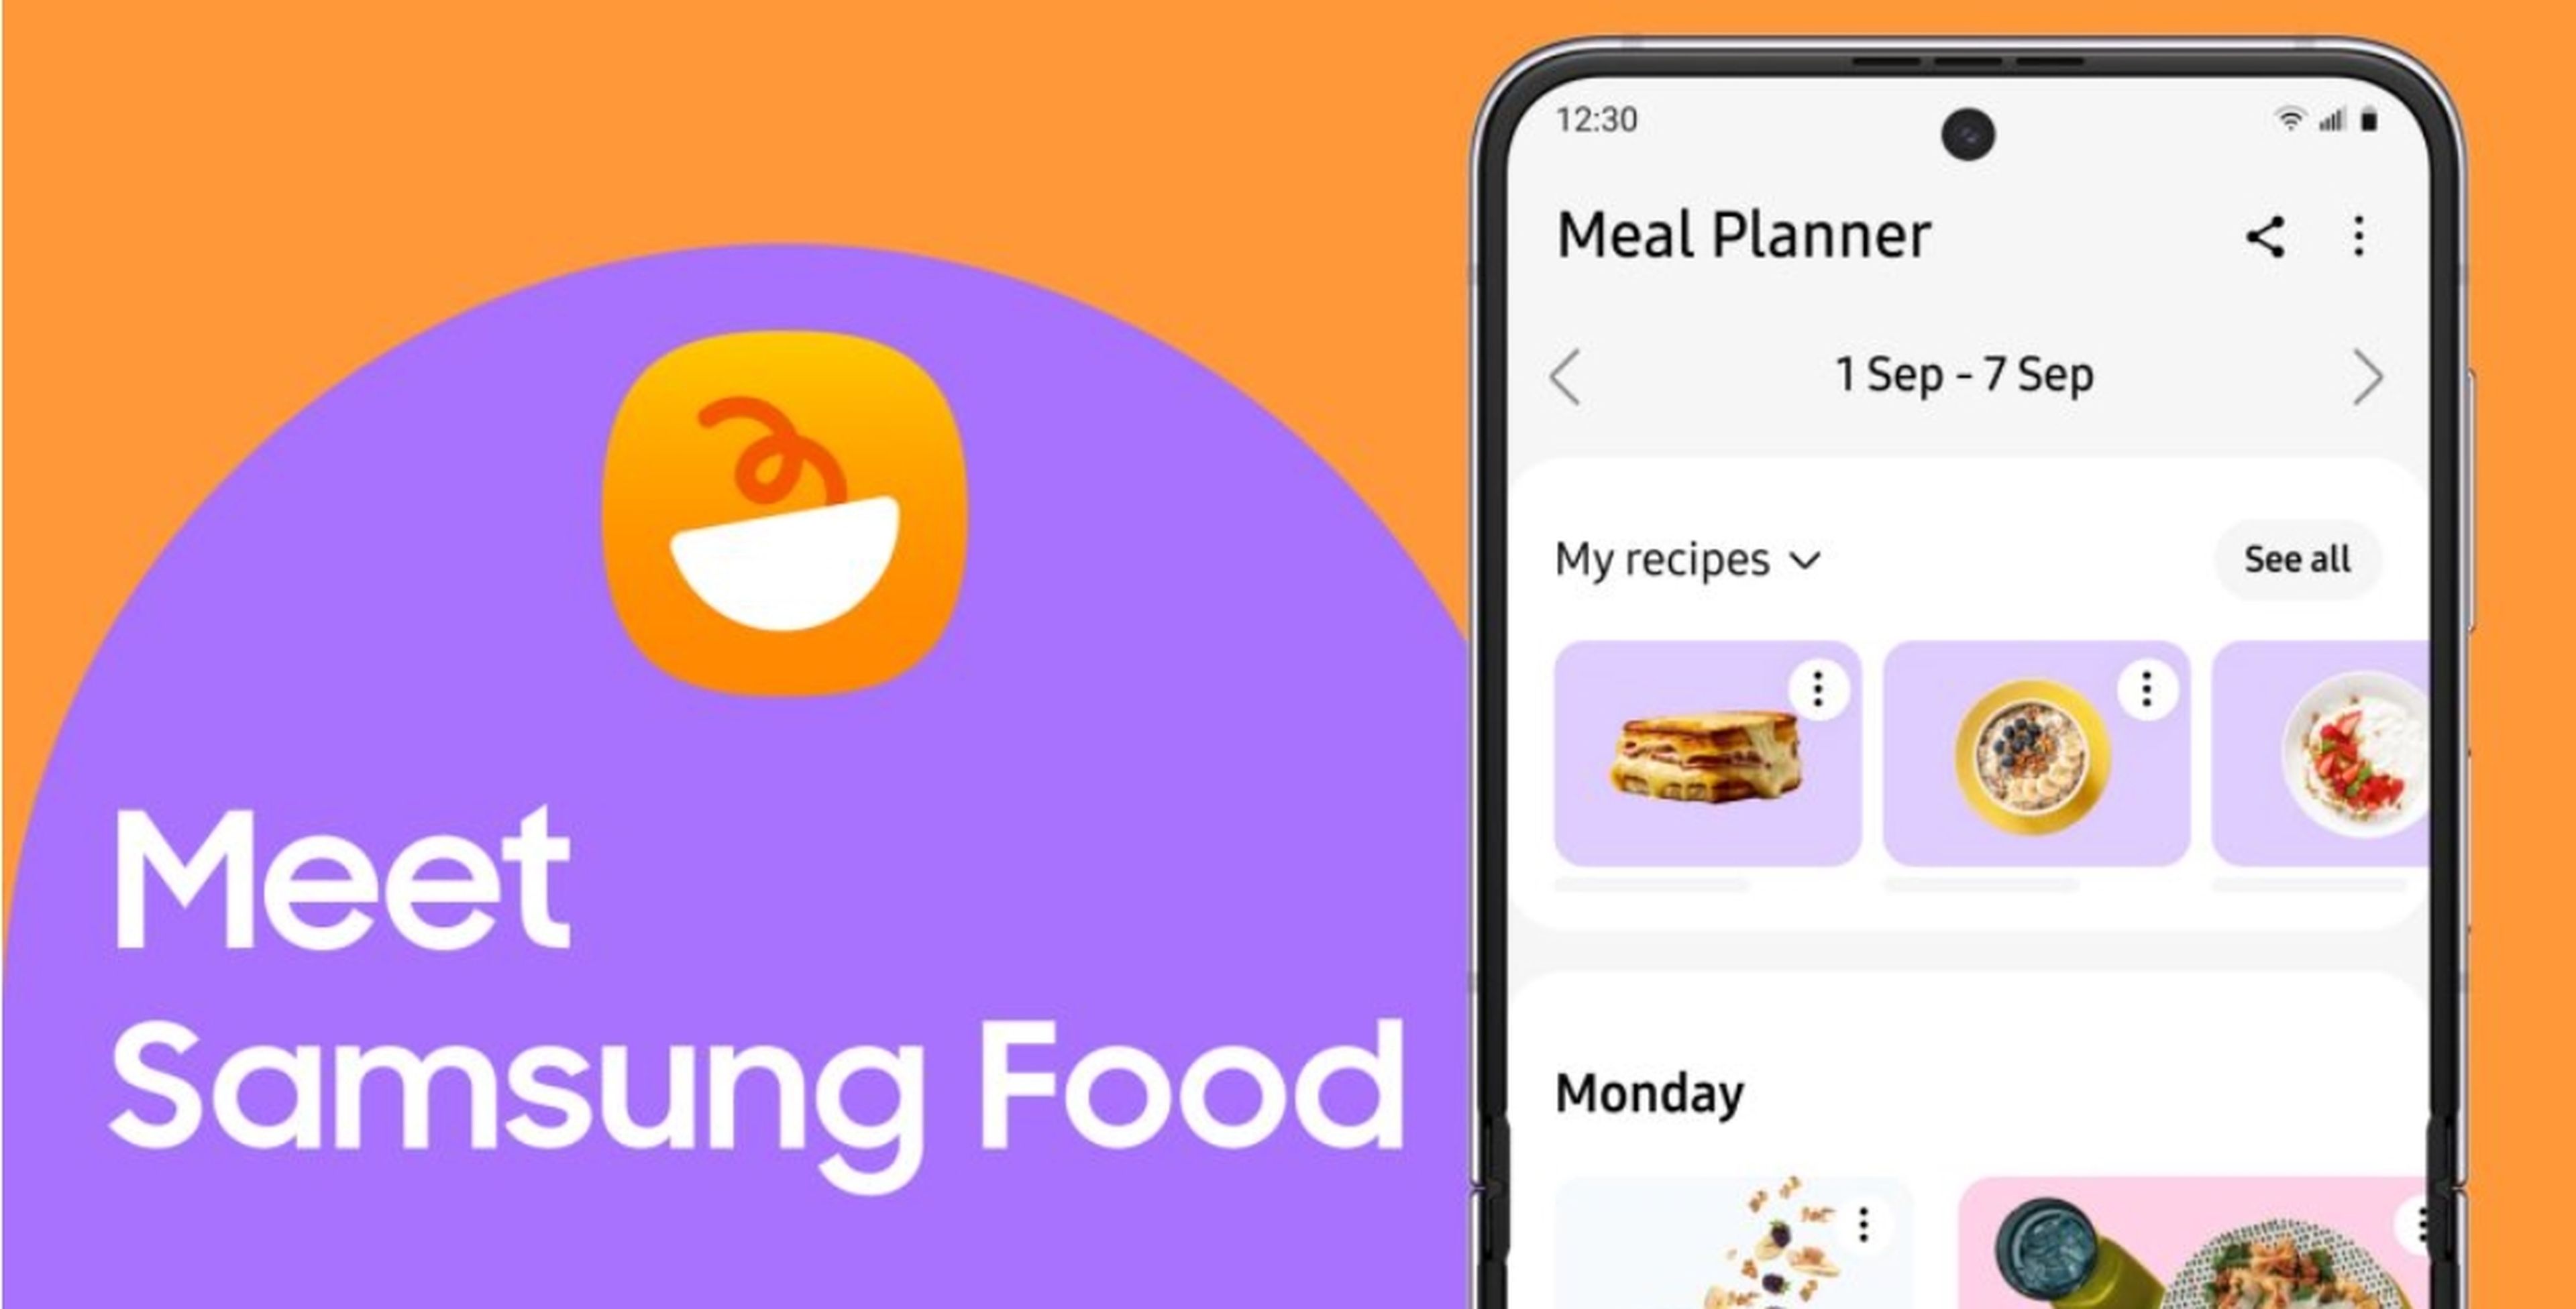 Samsung Food app